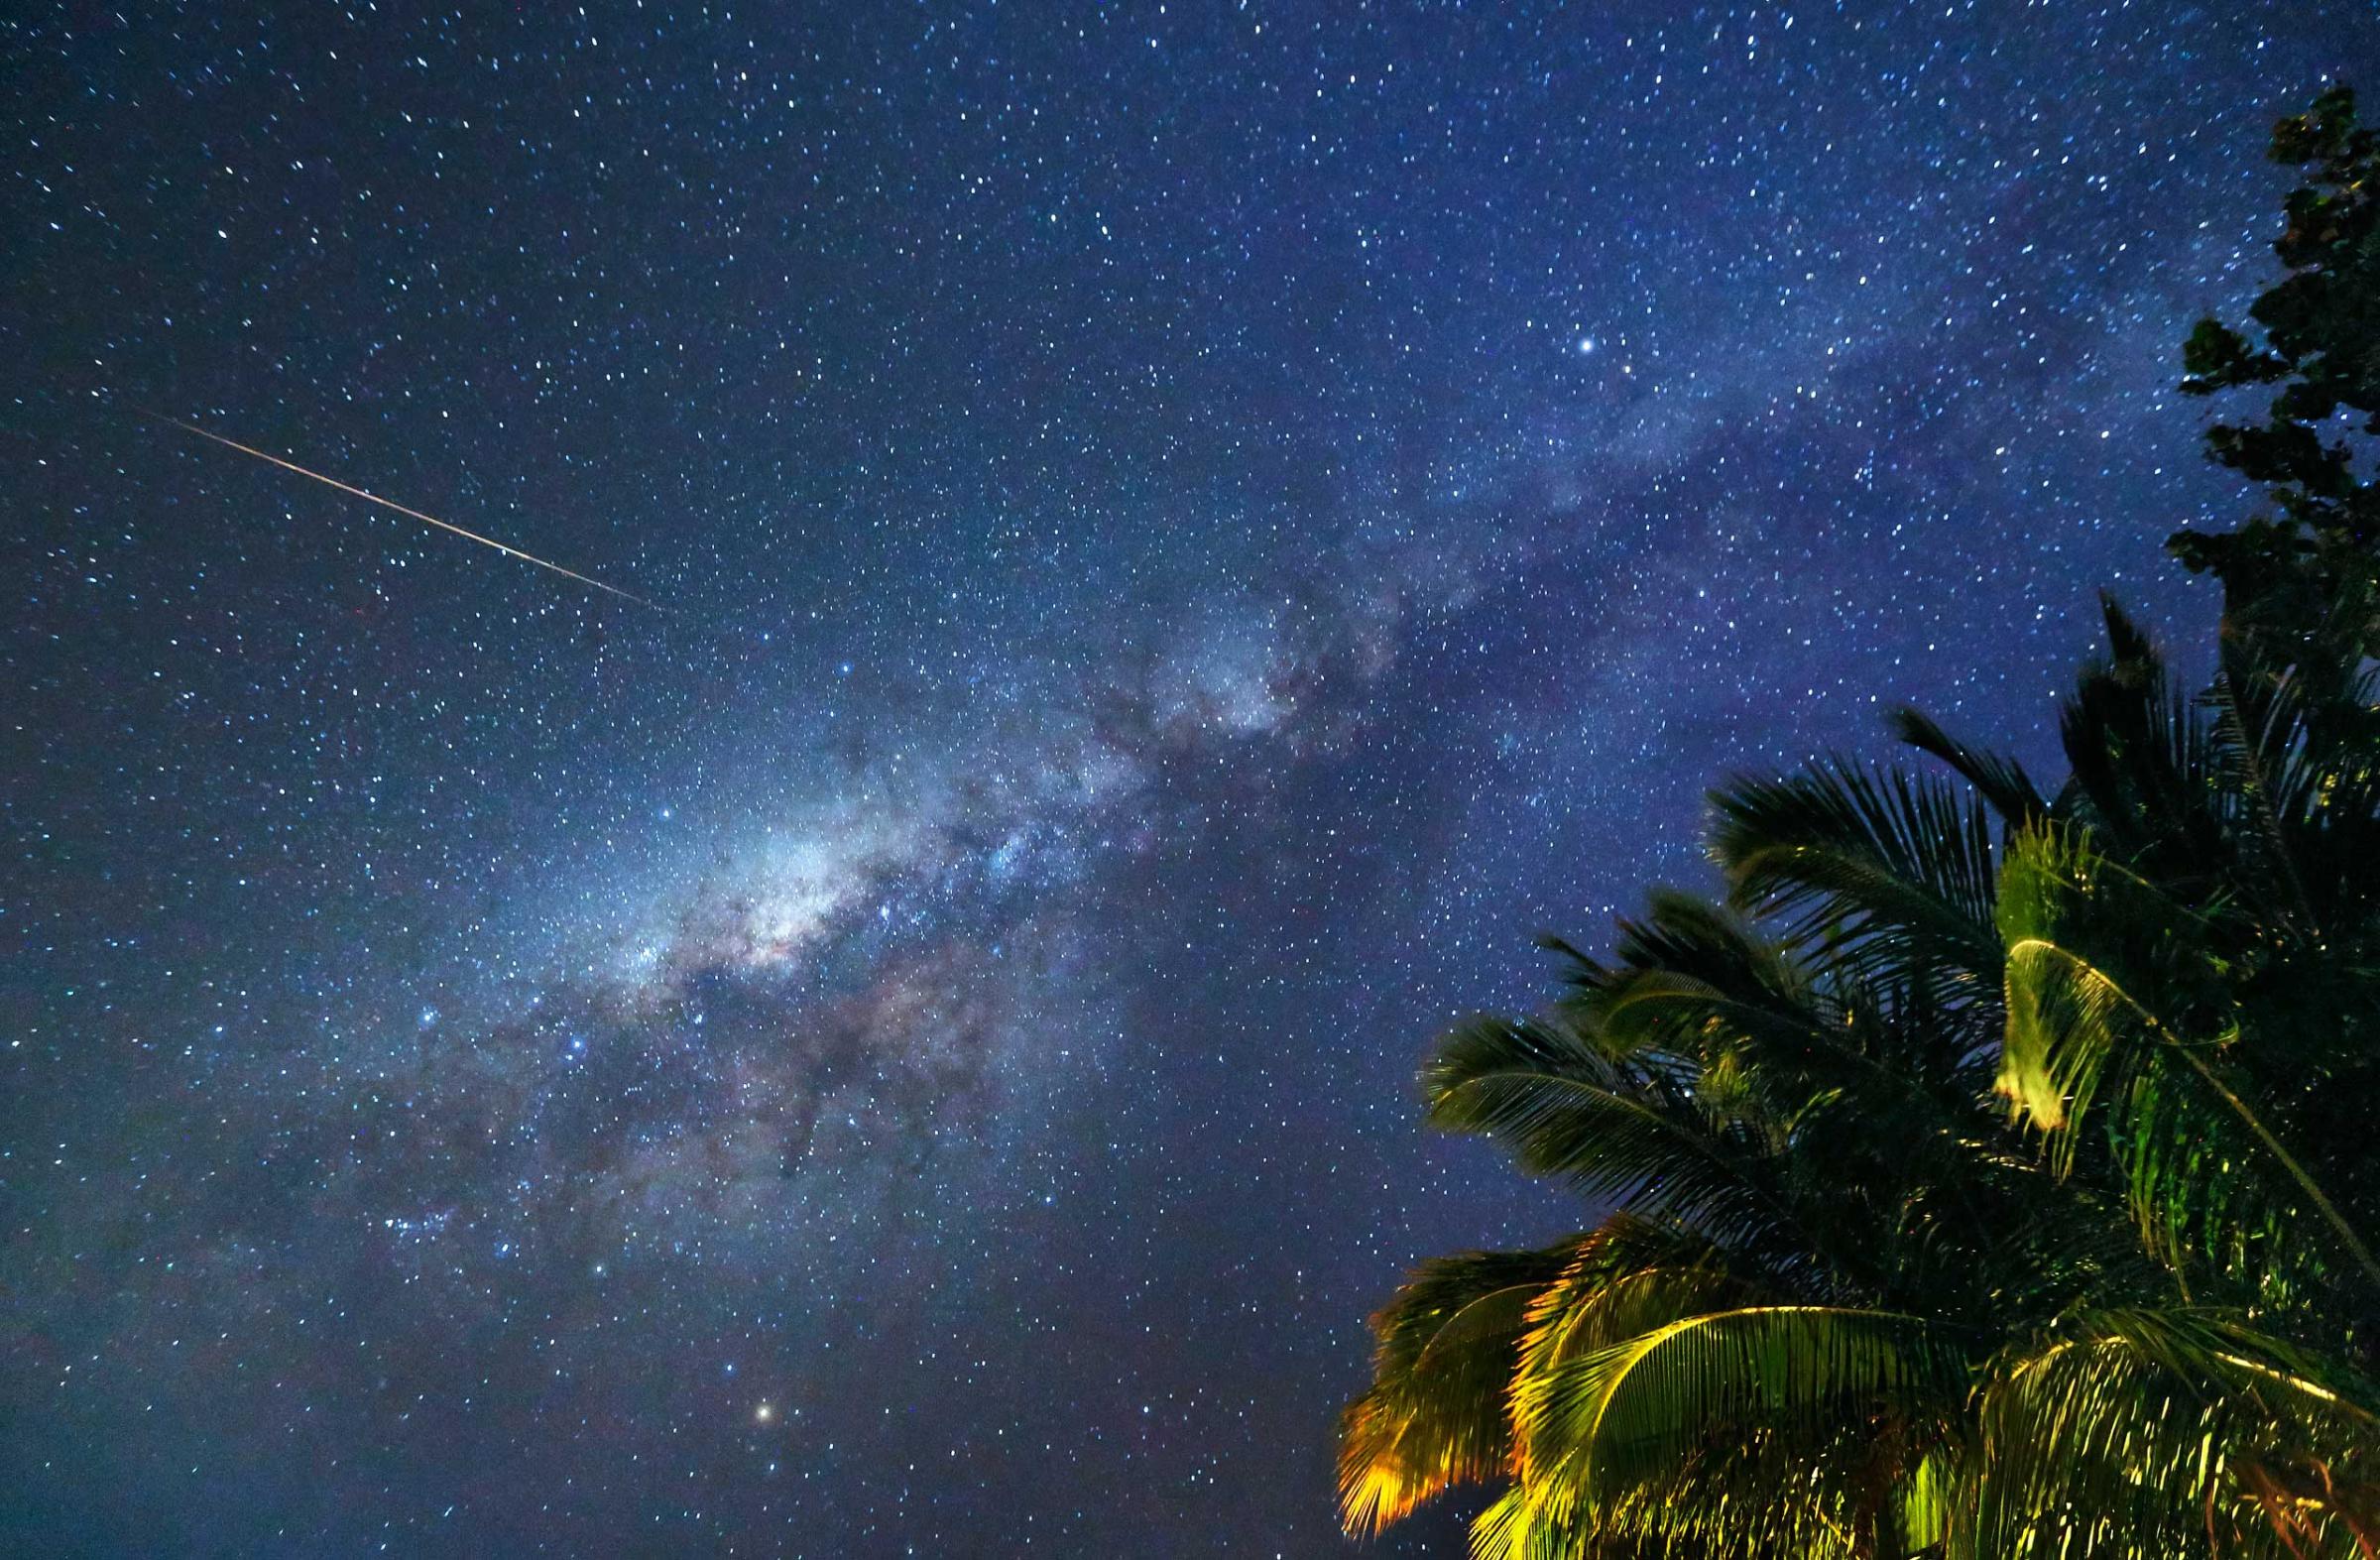 A meteor crosses the Milky Way